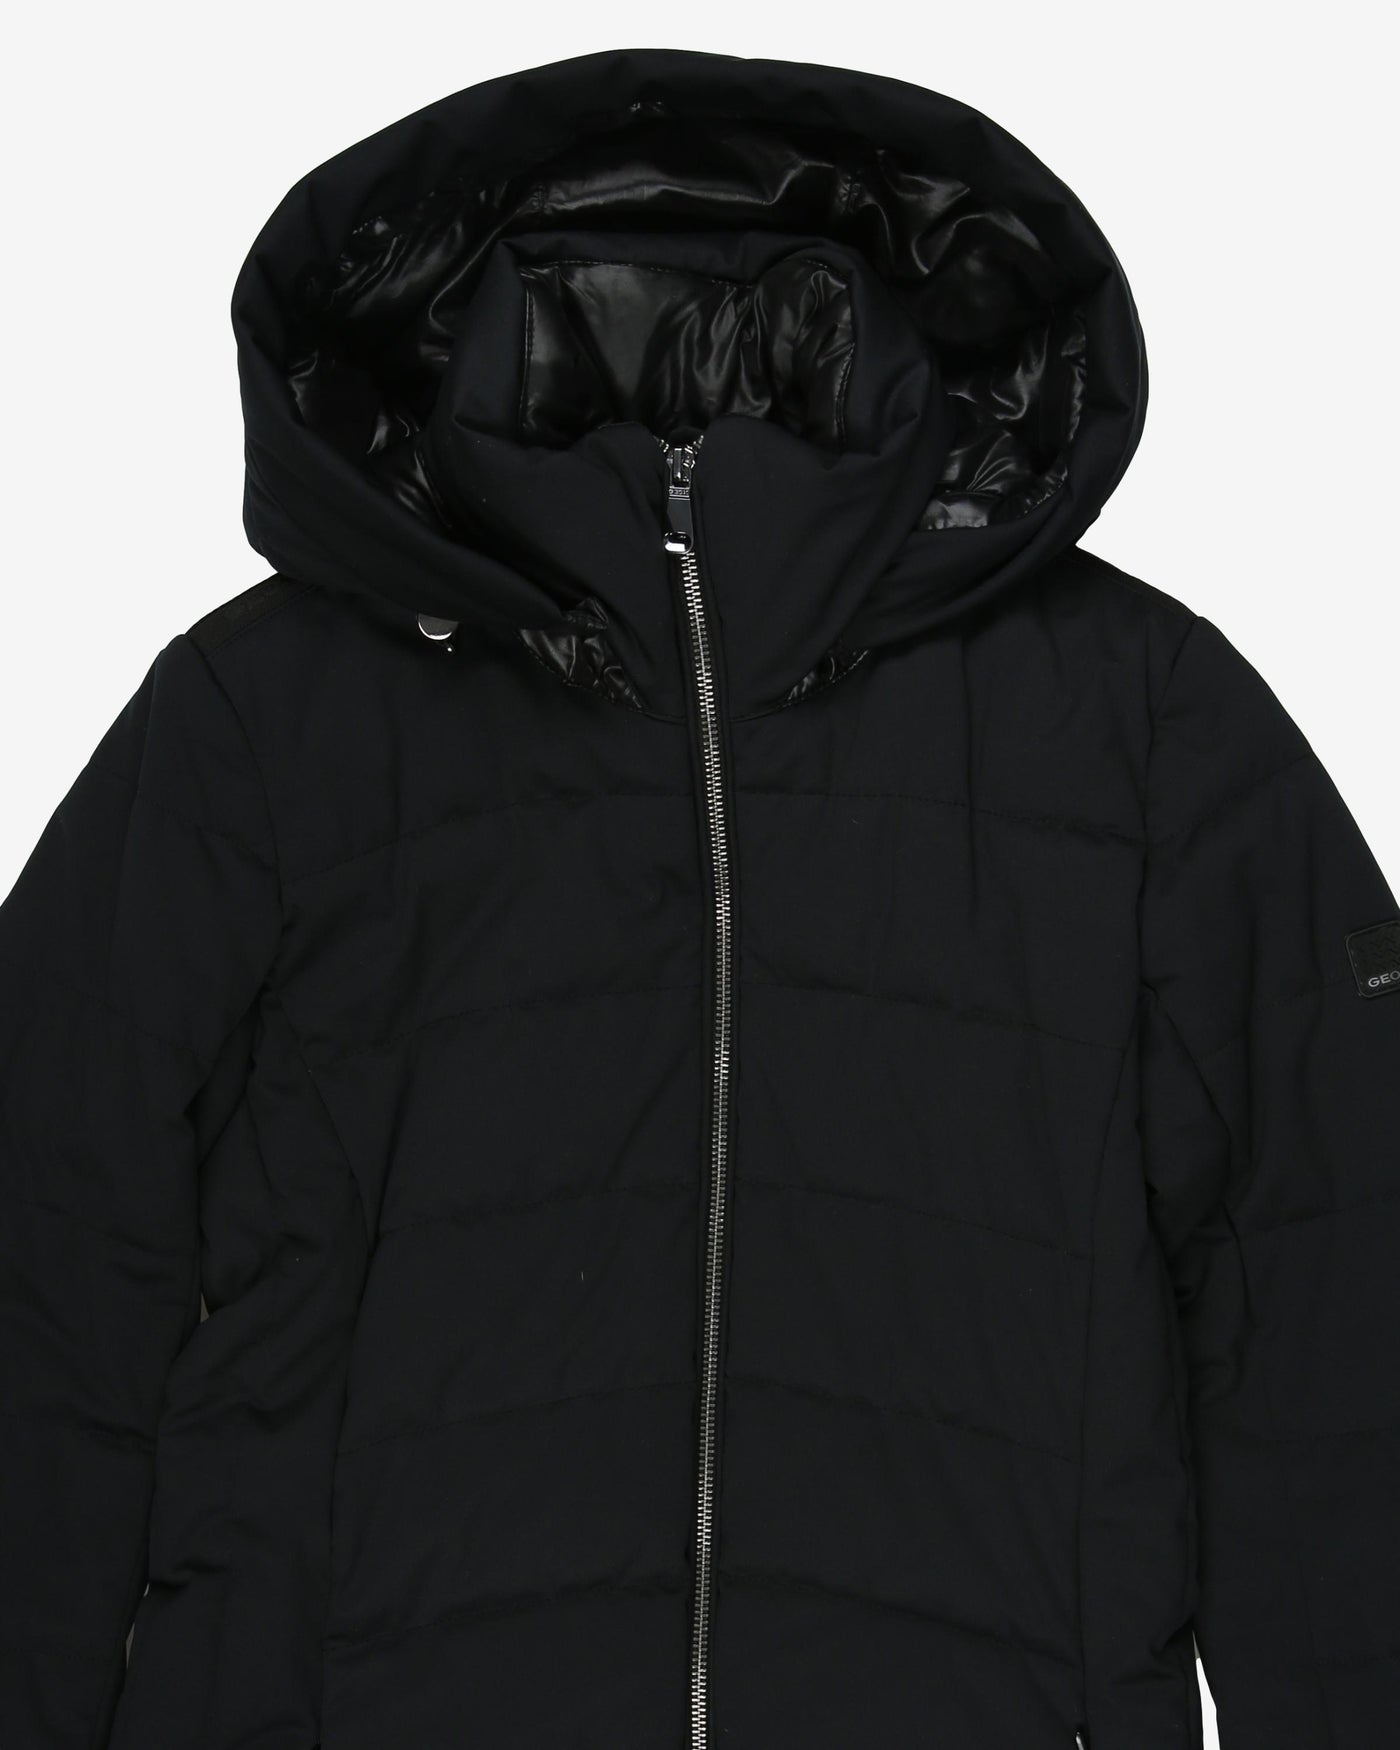 Geox puffa jacket in black - XS